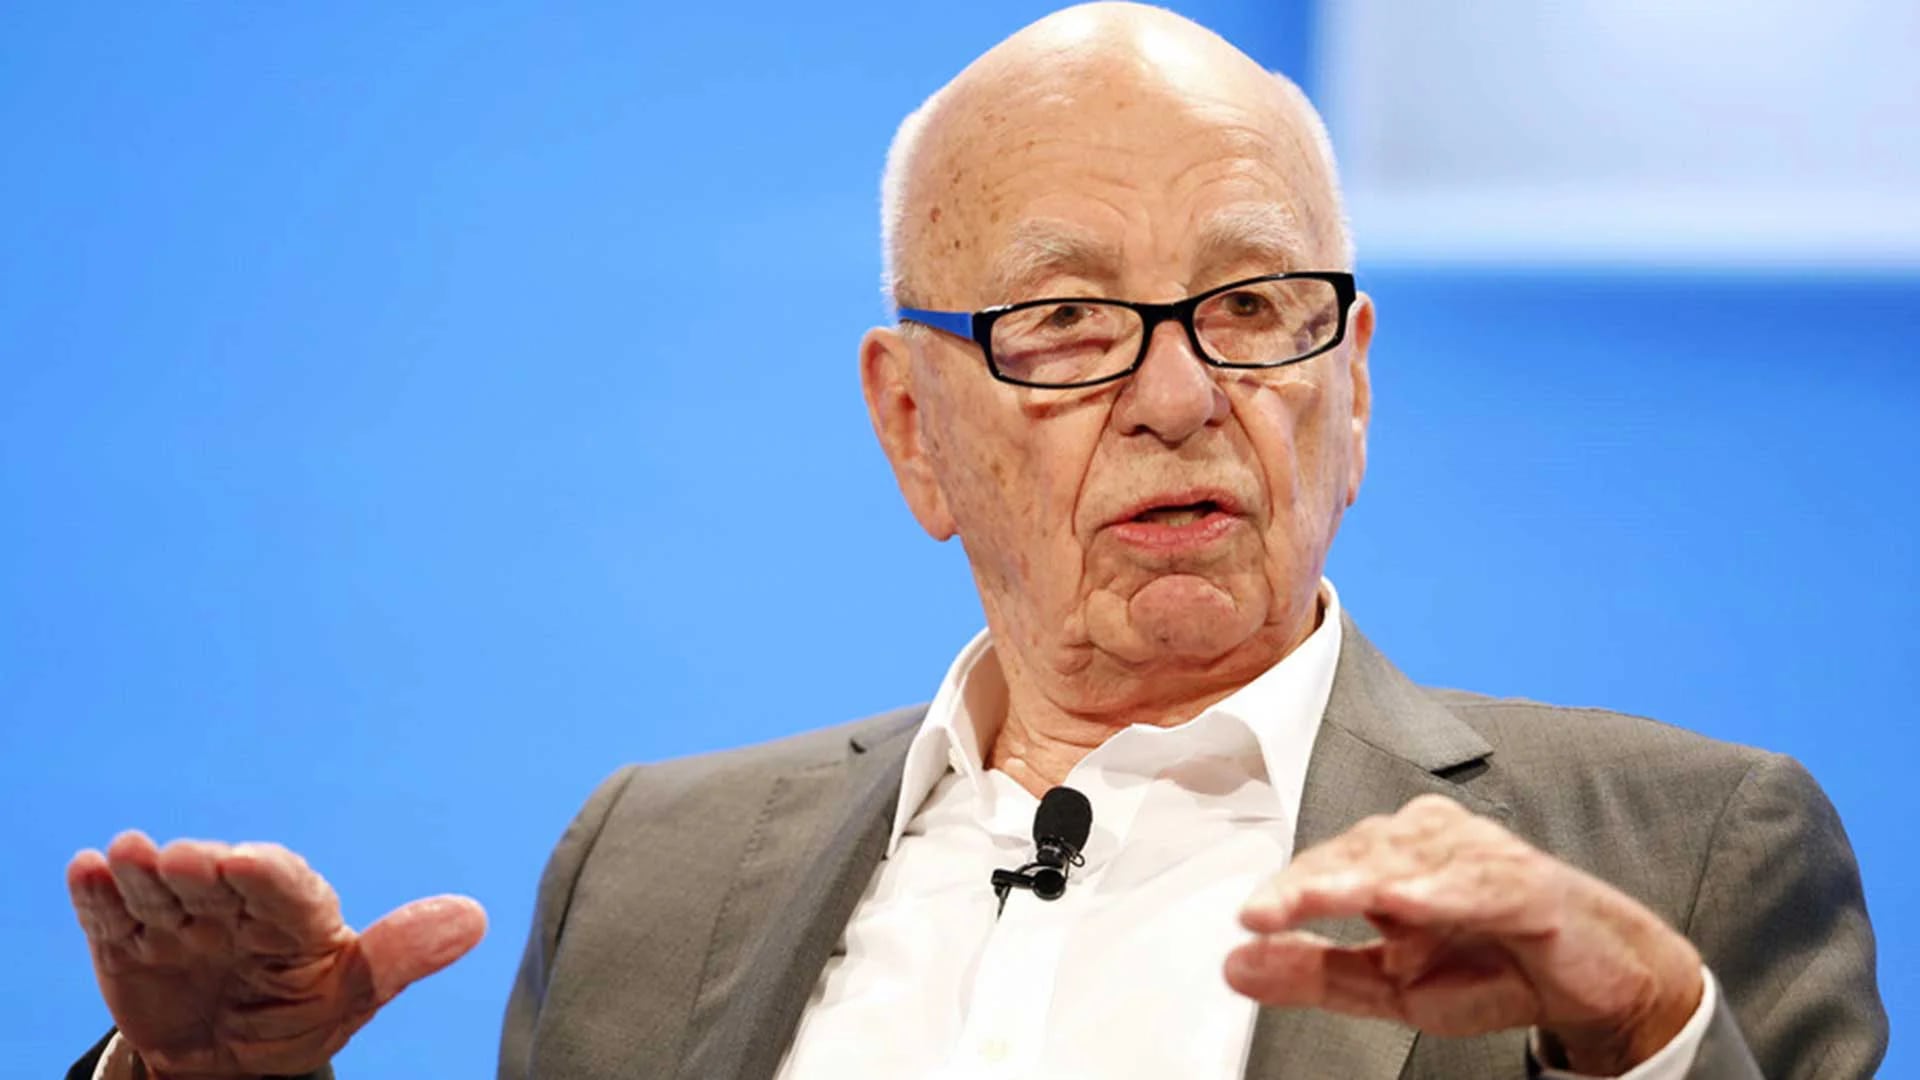 Rupert Murdoch asumirá el control de Fox News y Fox Business Network (Reuters)